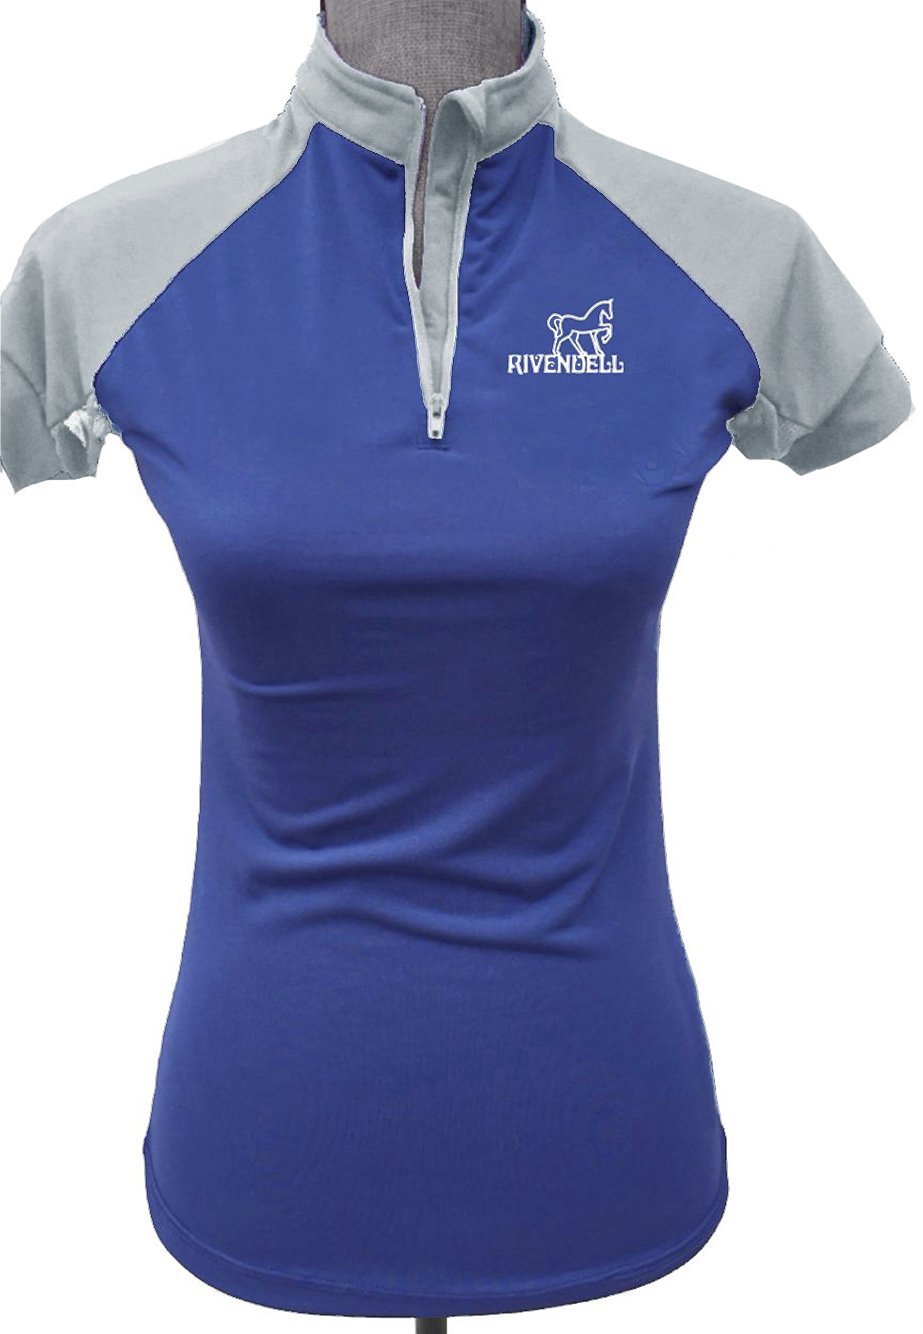 Rivendell Custom Short-Sleeve Sun Shirt - Royal Blue/Ladies + Youth Sizes